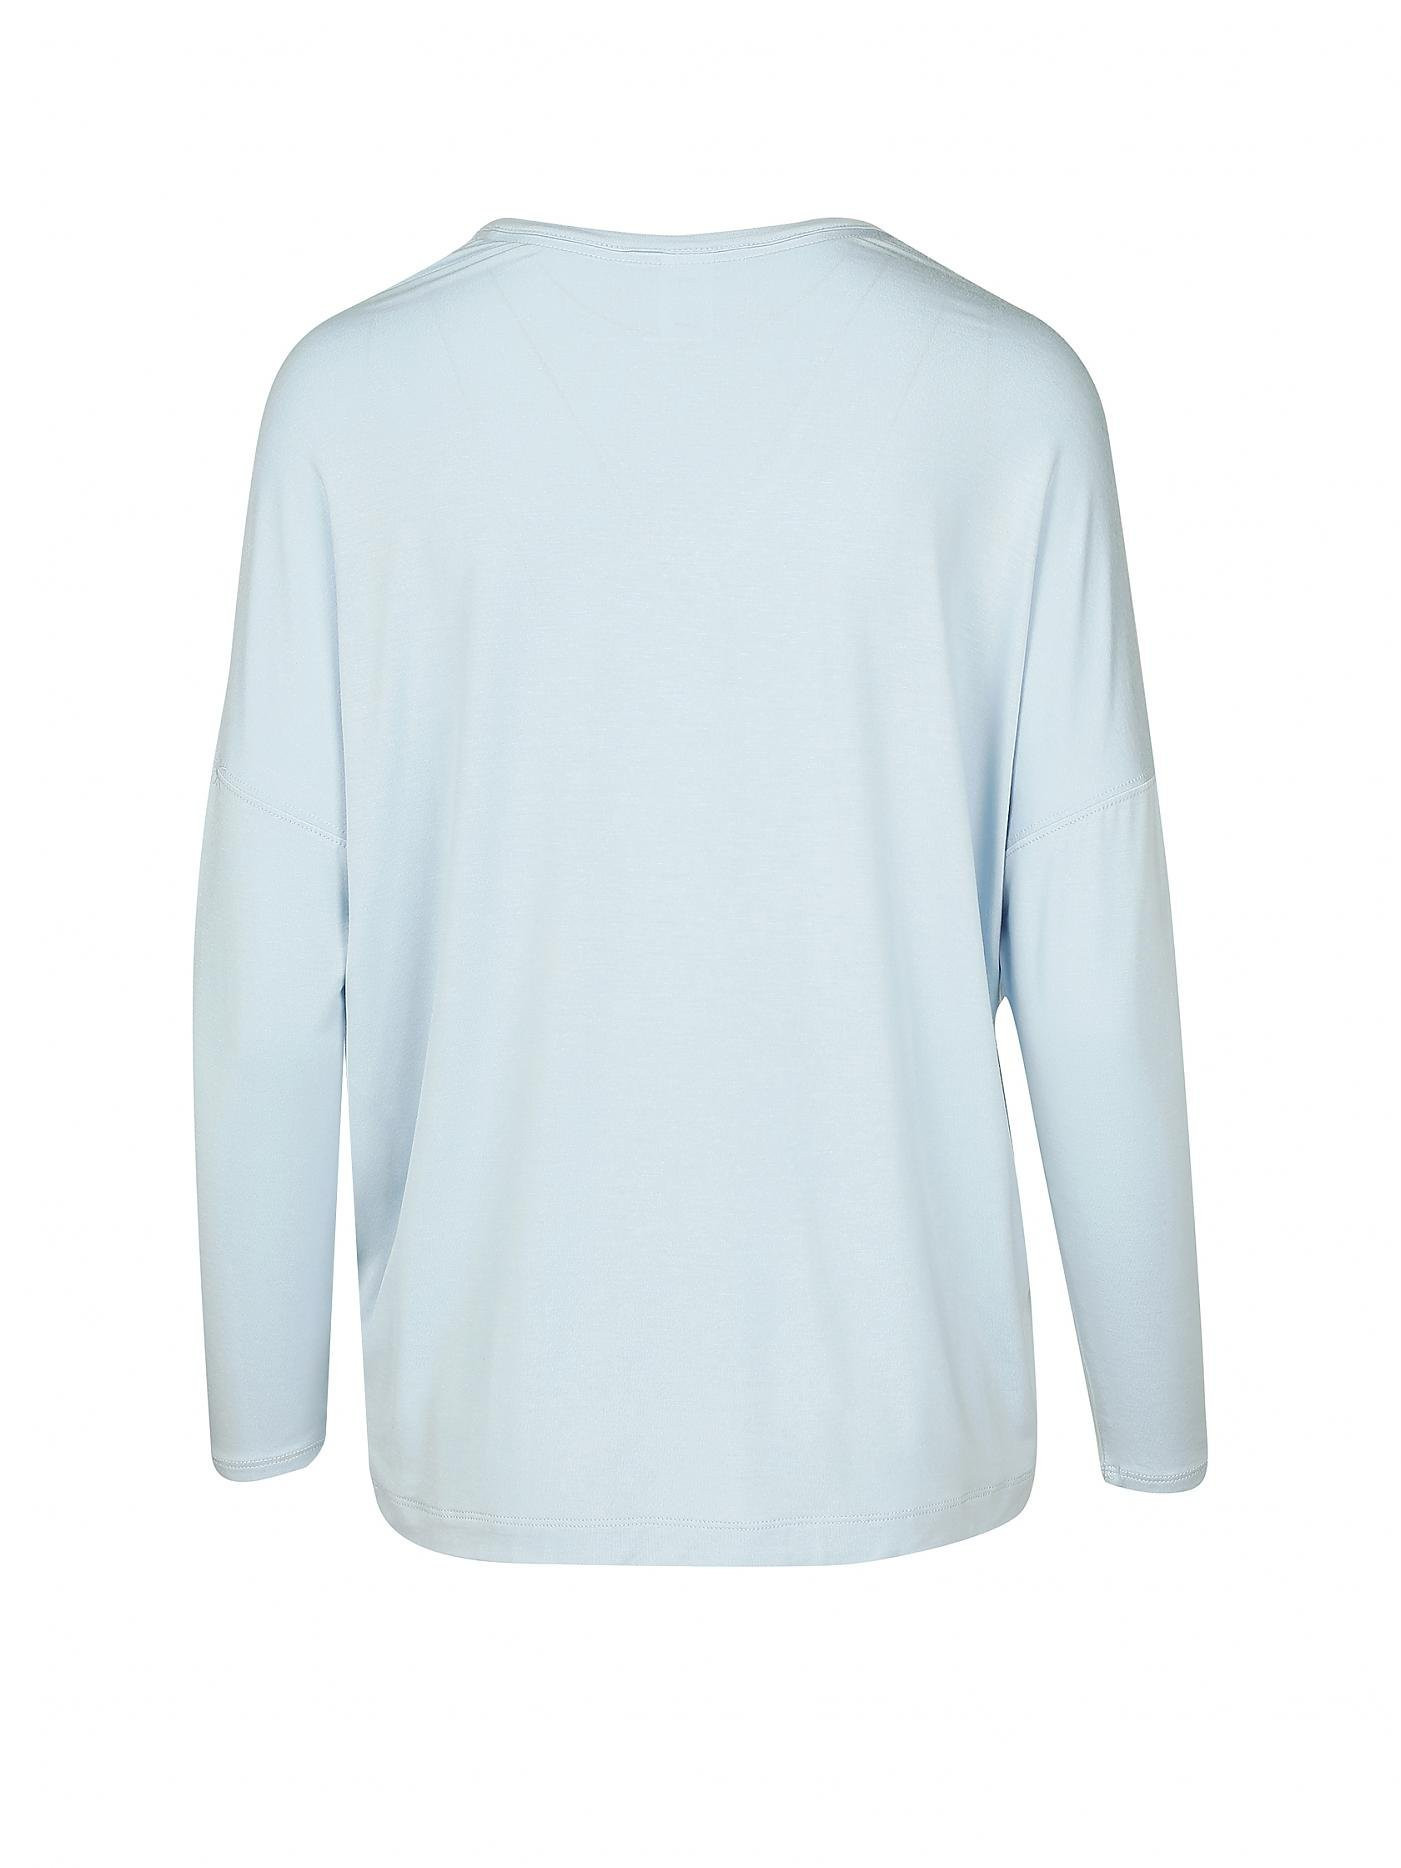 Dámské triko na spaní model 8390794 modrá - Calvin Klein Velikost: M, Barvy: Modrá